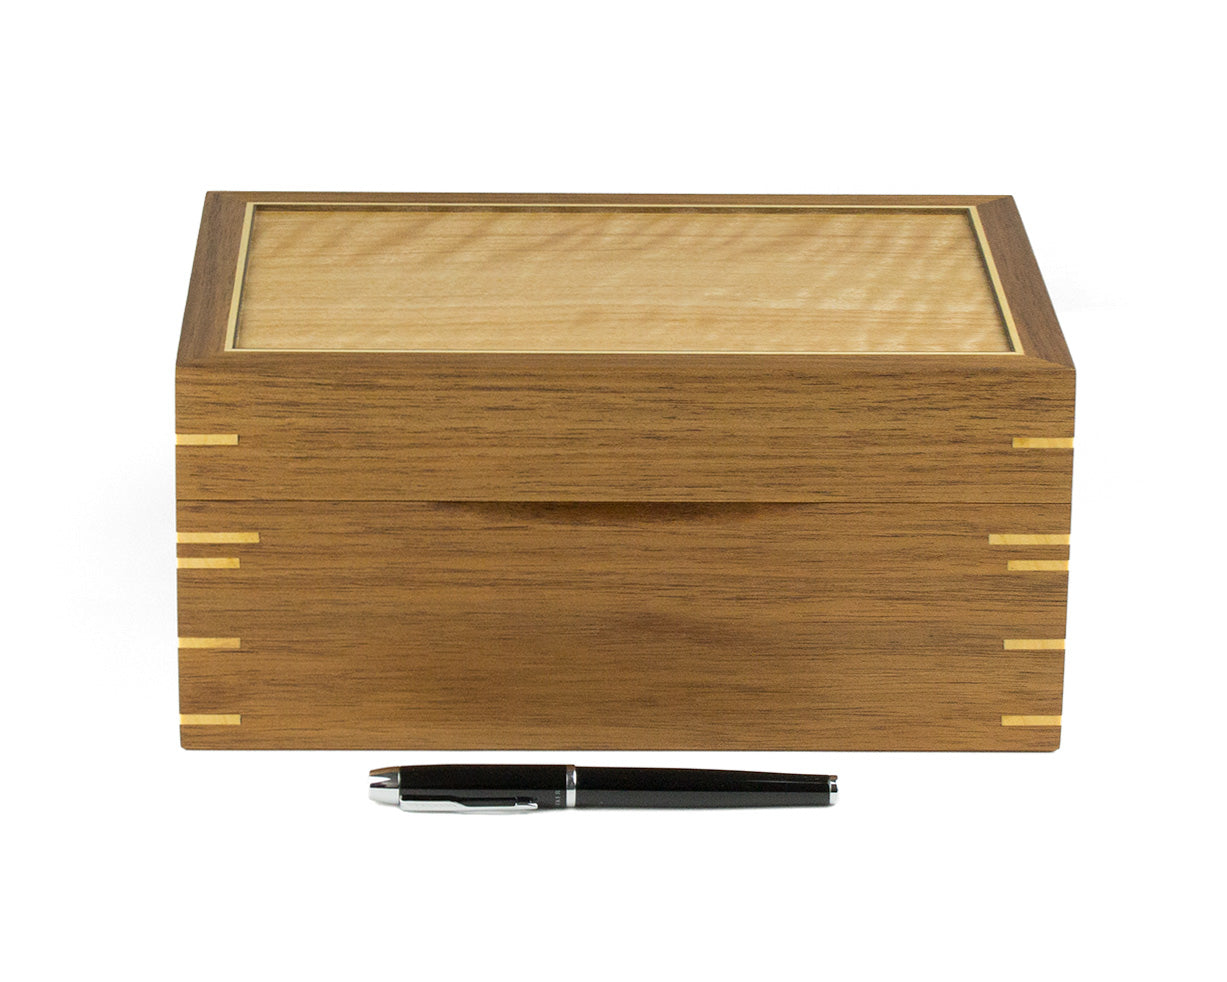 Wooden jewellery box handcrafted from Tasmanian Blackwood and Tasmanian Oak